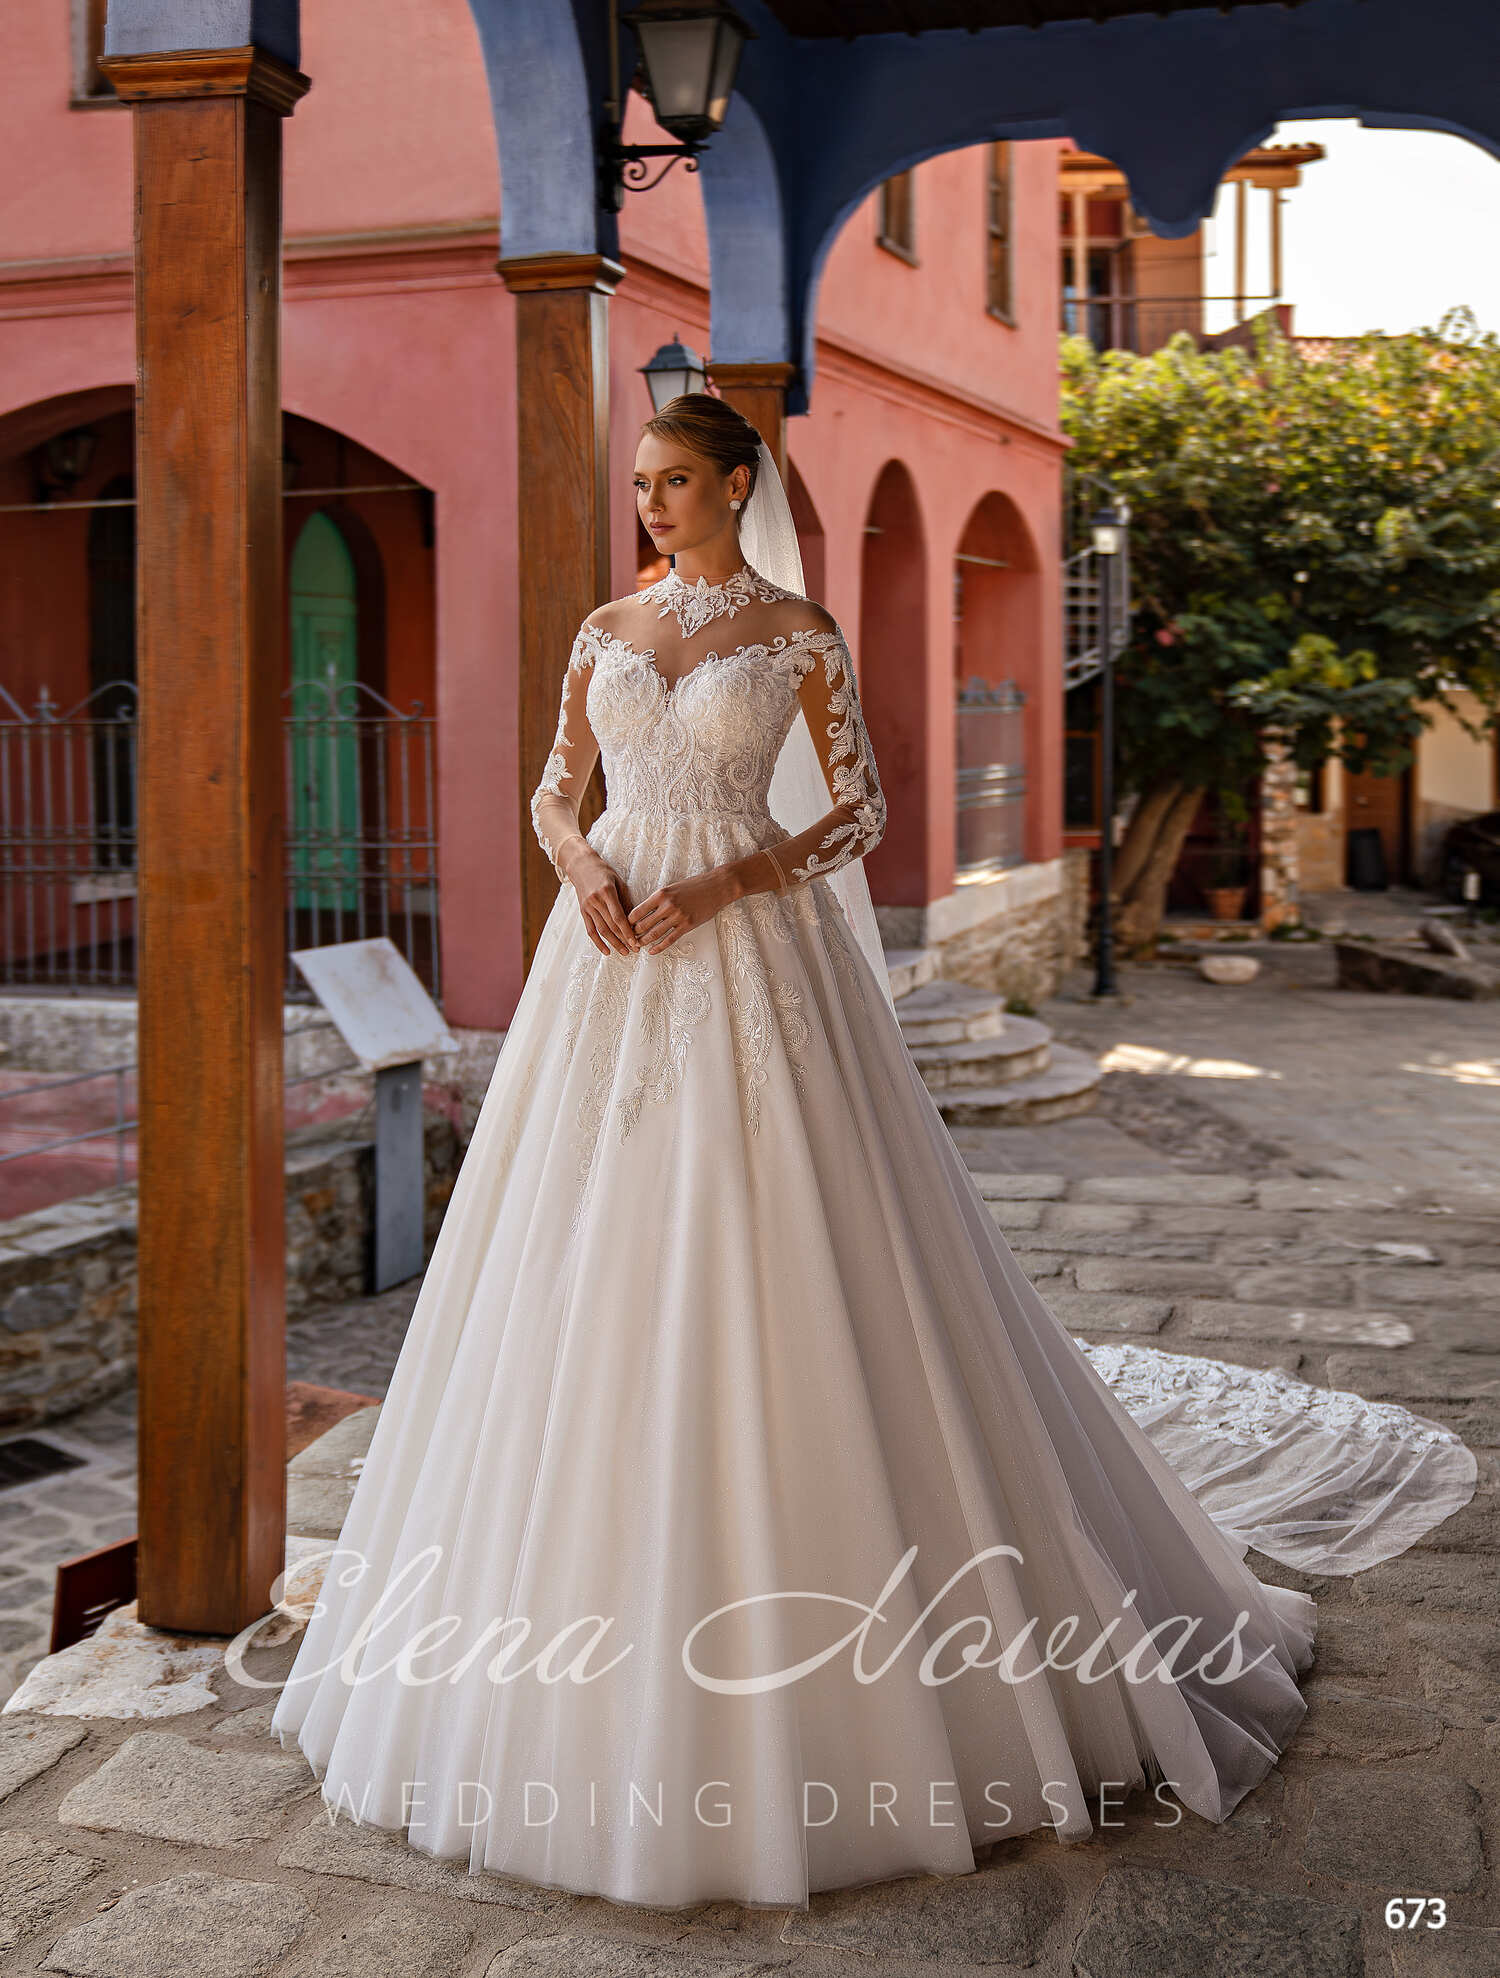 Wedding dresses 673 2